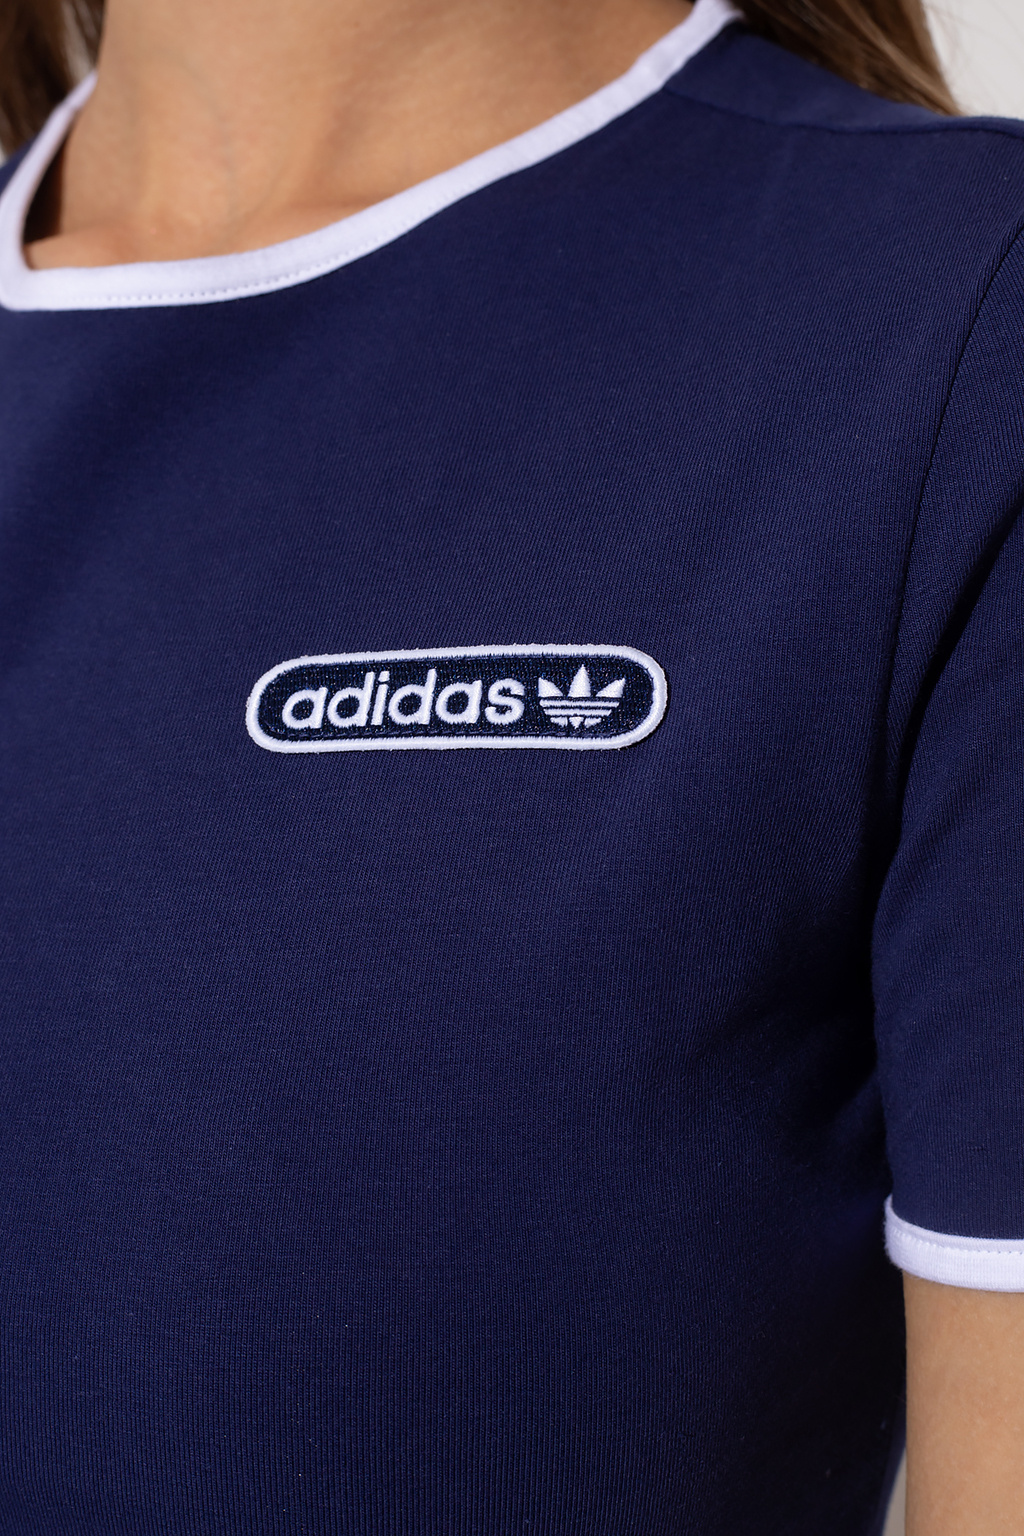 adidas - T 3 Australia Filles Entraînement blue Navy IetpShops Stripe Logo ADIDAS Originals - Tights - Junior shirt